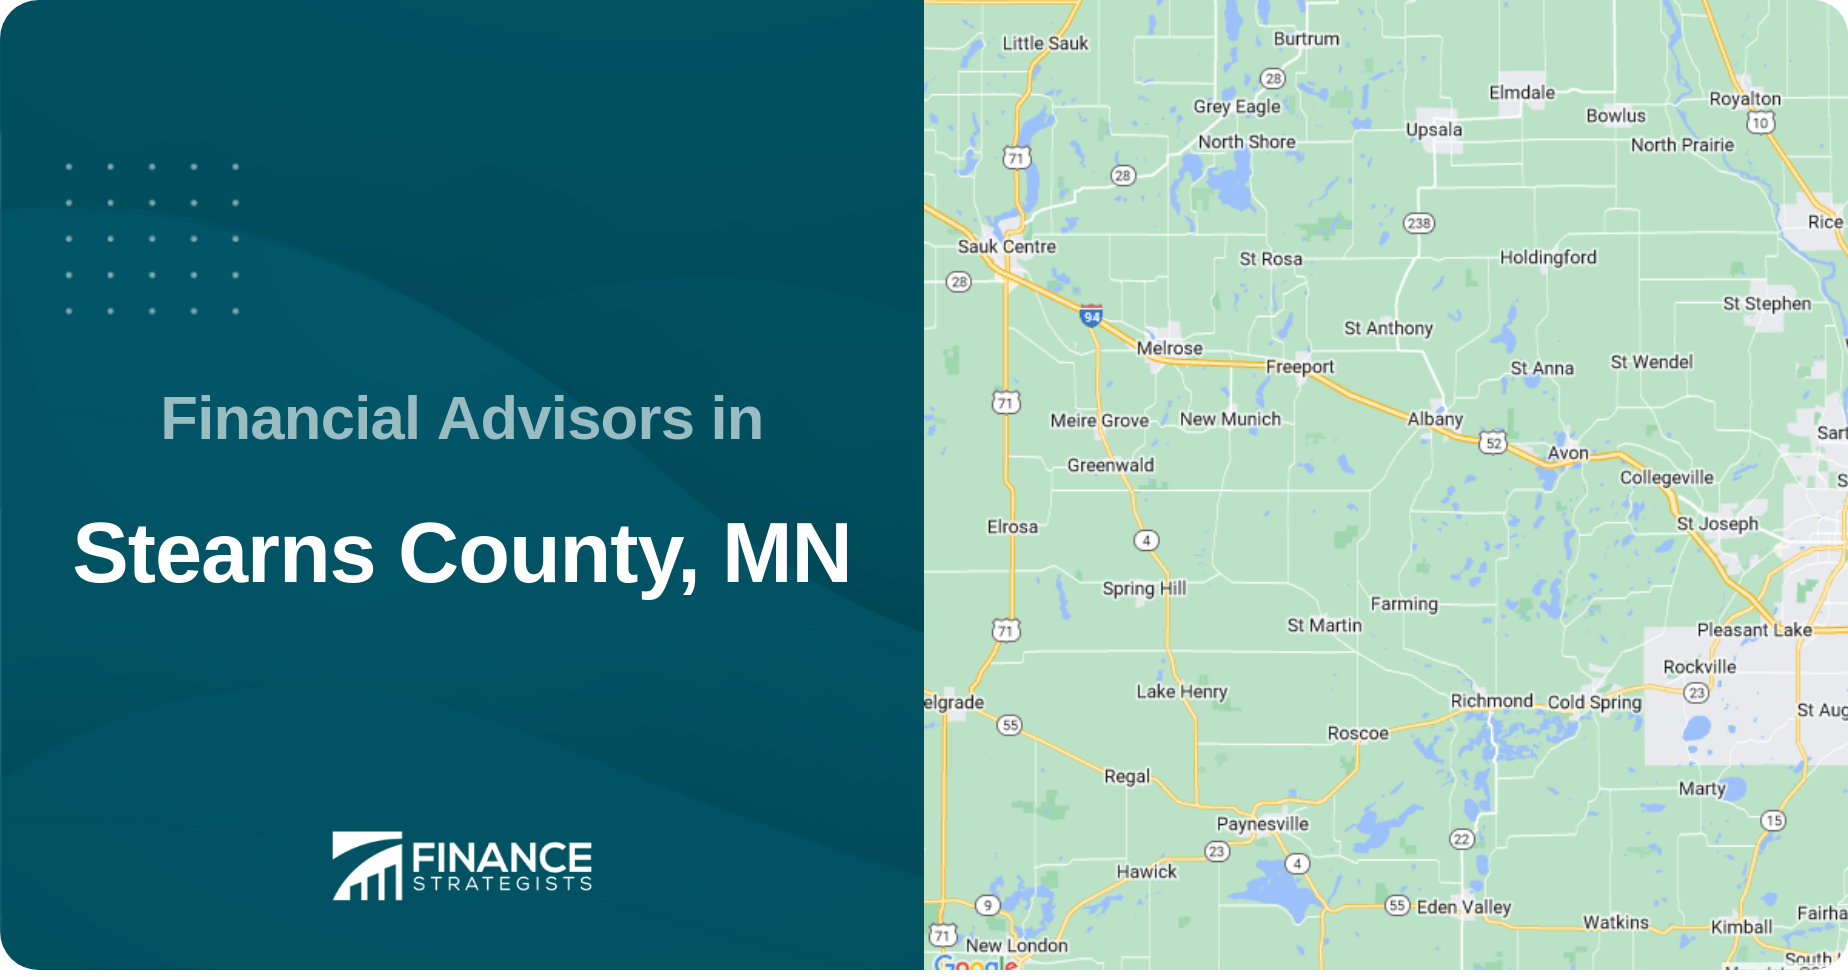 Financial Advisors in Stearns County, MN